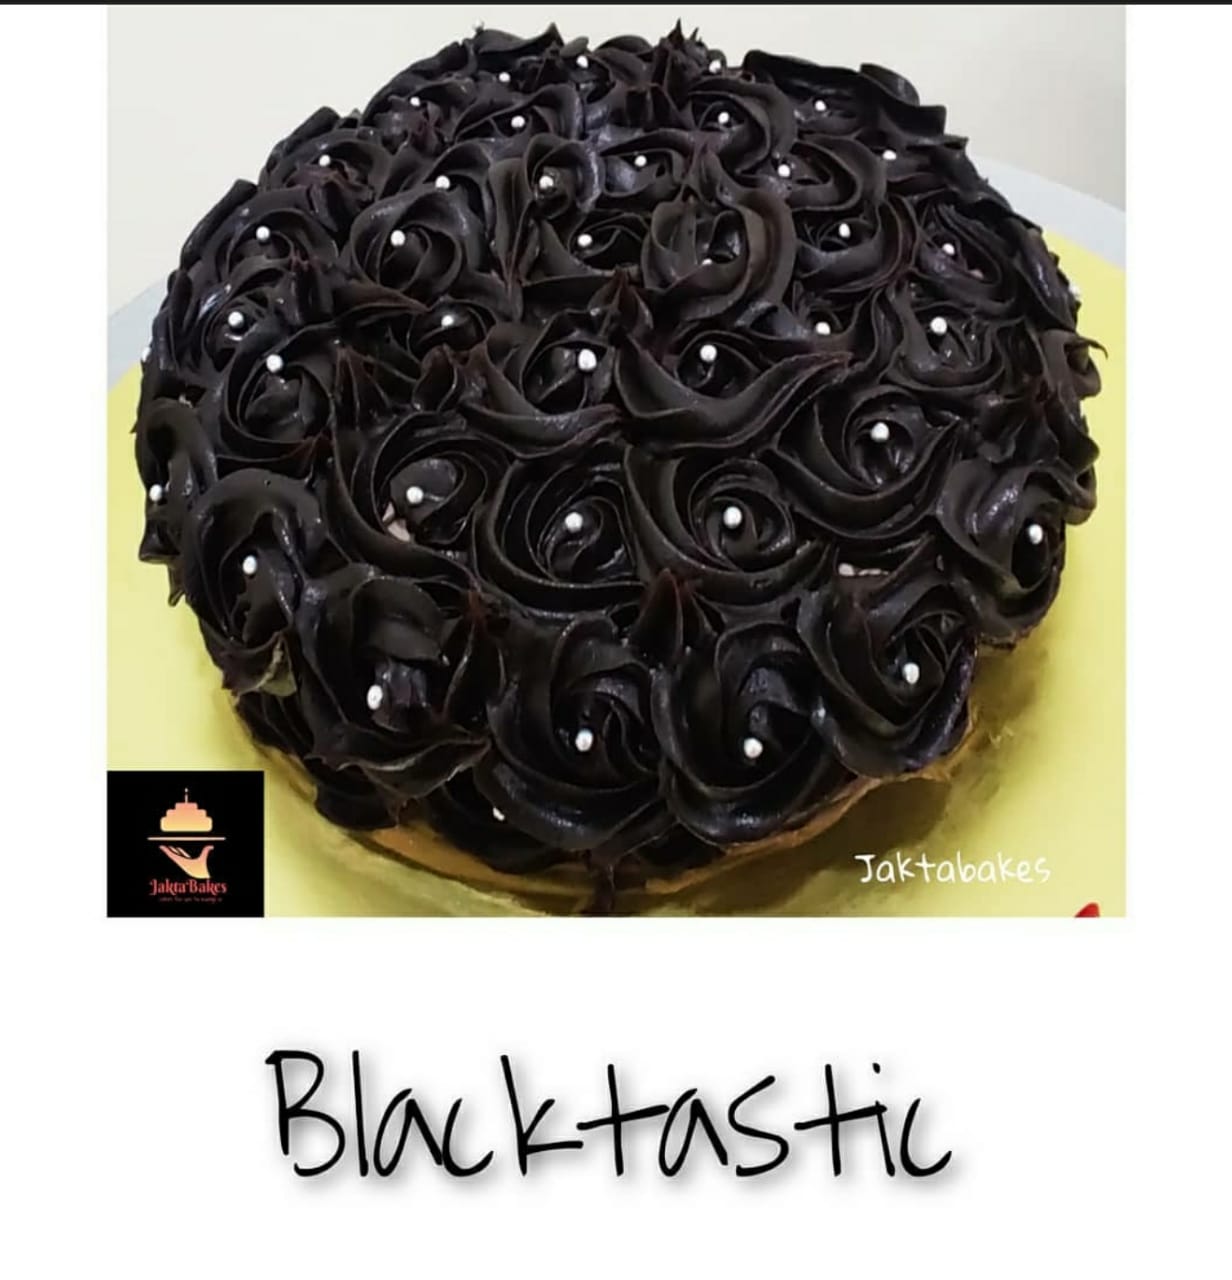 Blacktastic – Chocolate Truffle cake Designs, Images, Price Near Me